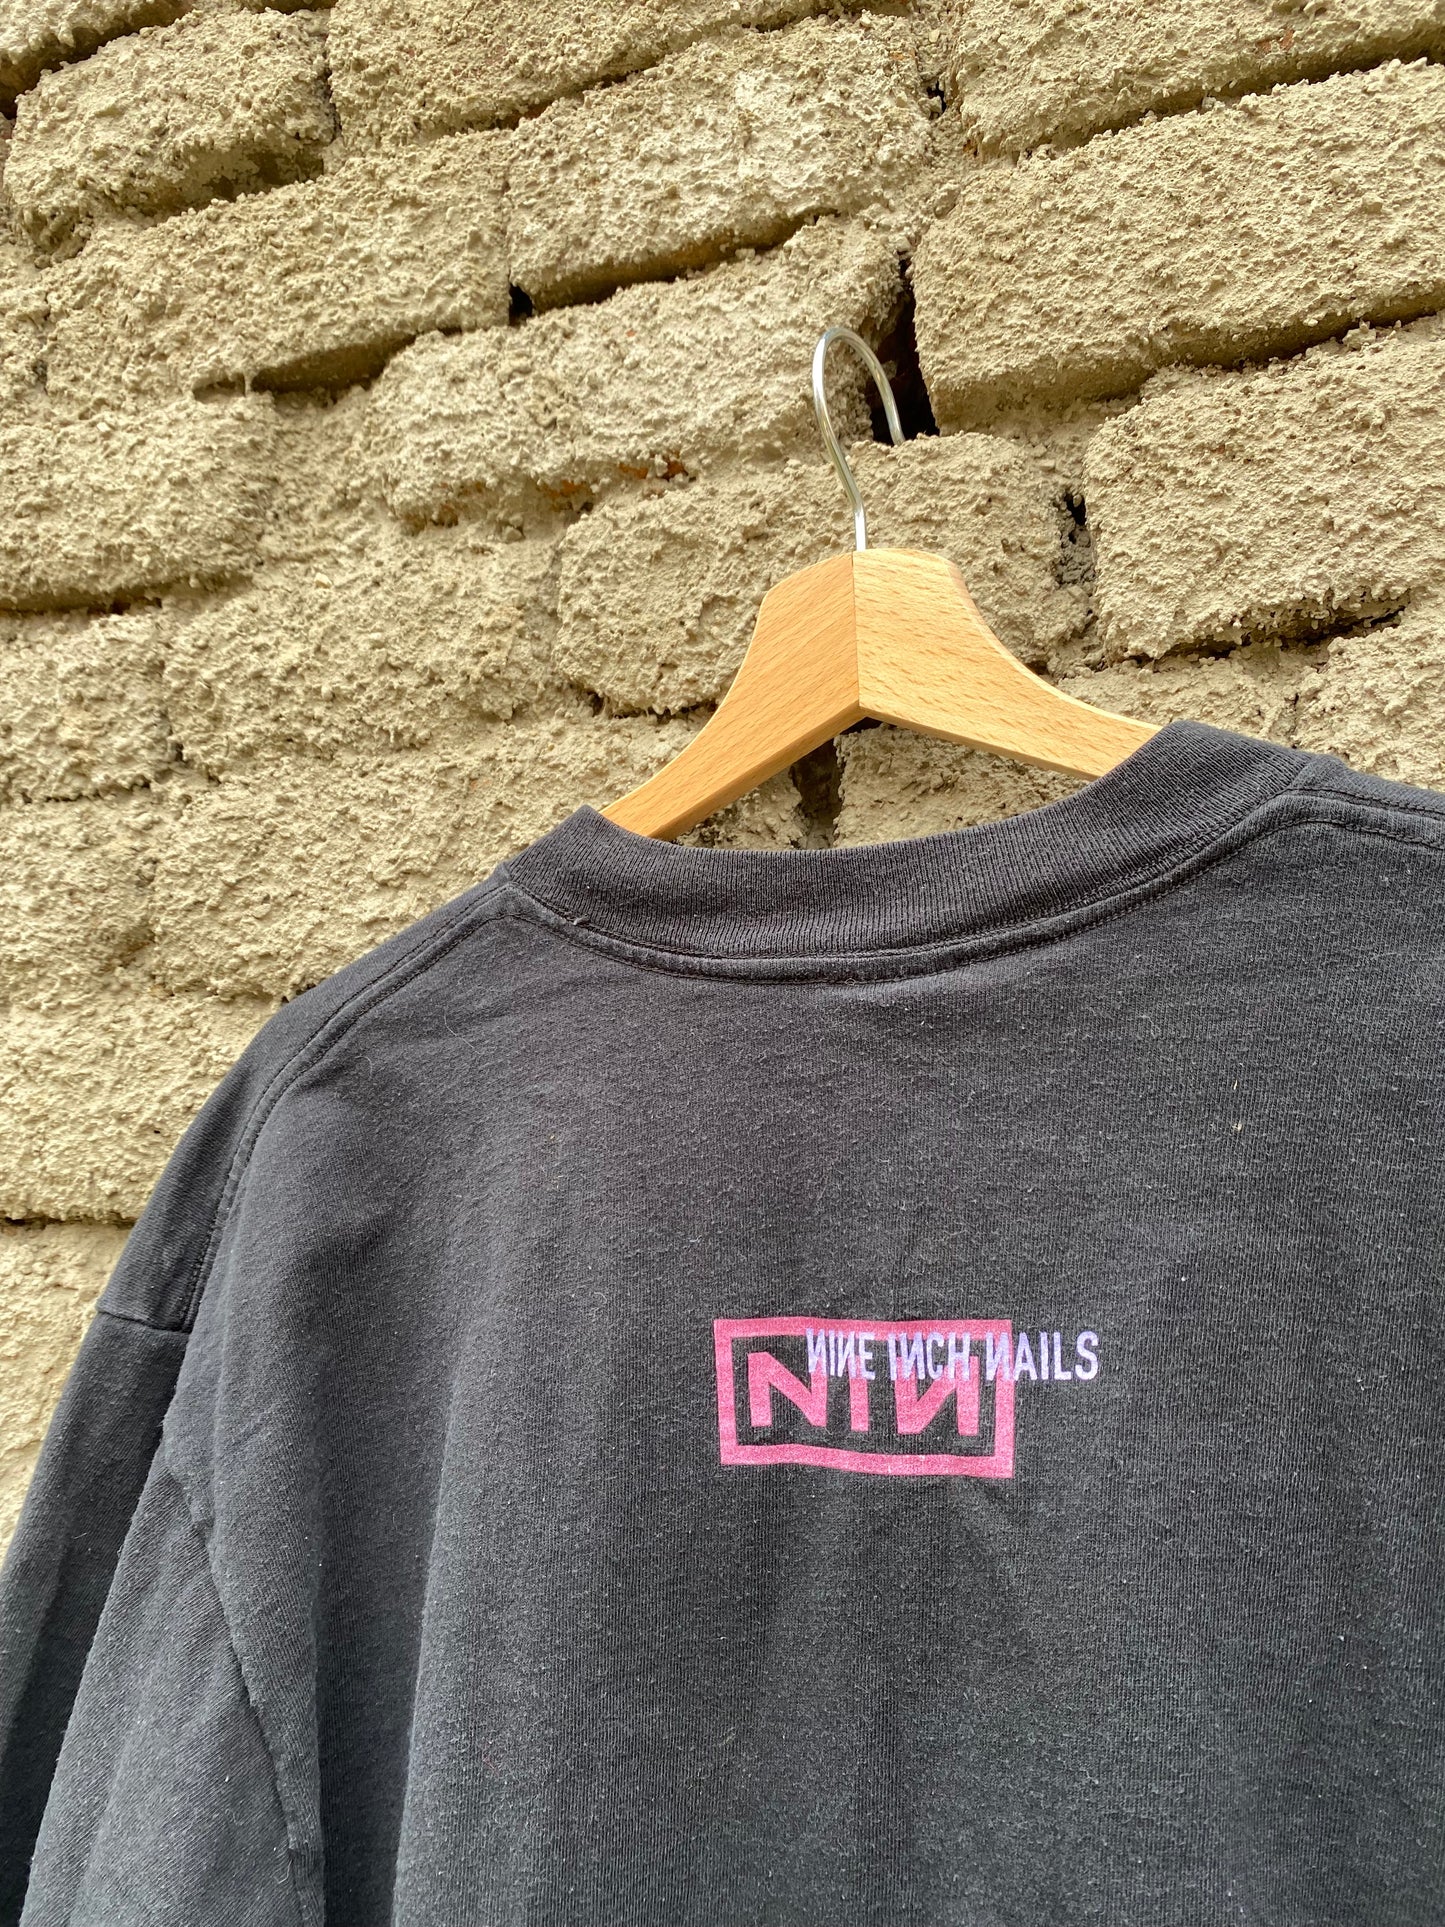 Vintage Nine Inch Nails "Perfect Drug" 1997 t-shirt - size XL